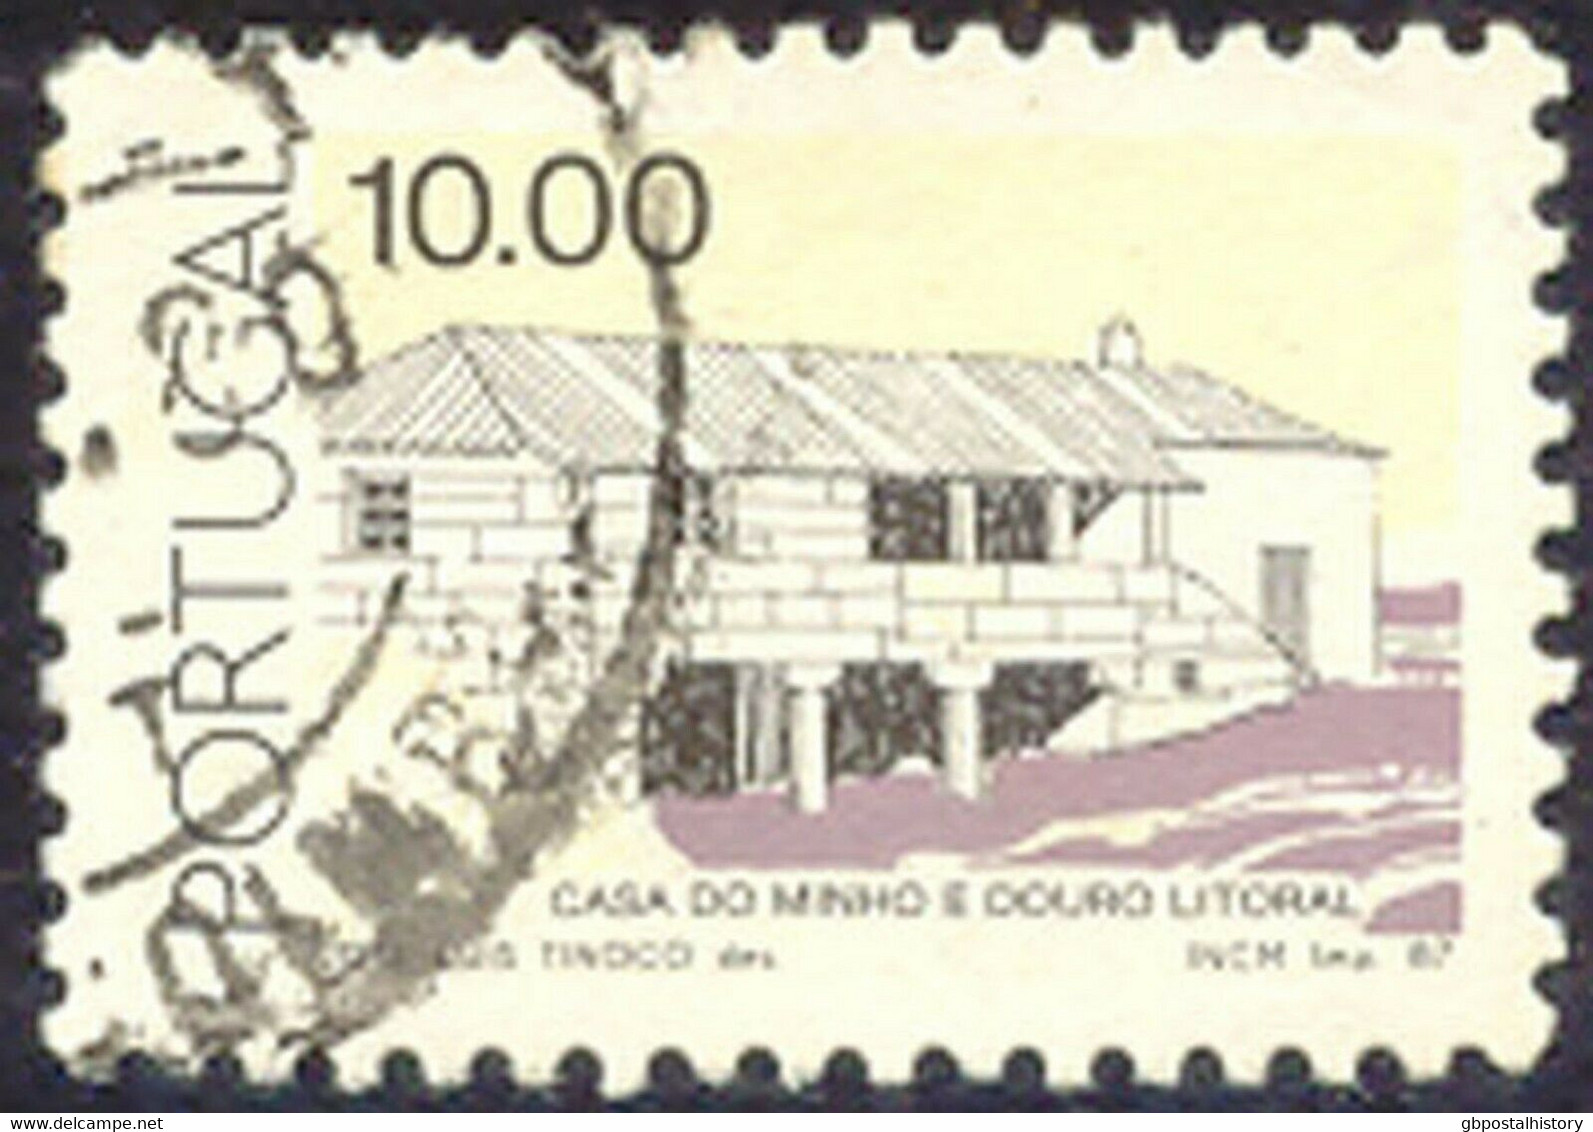 PORTUGAL 1987 10.00 (E.) Landhaus Minho Und Douro Litoral Gest. MISSING COLOUR - Usati